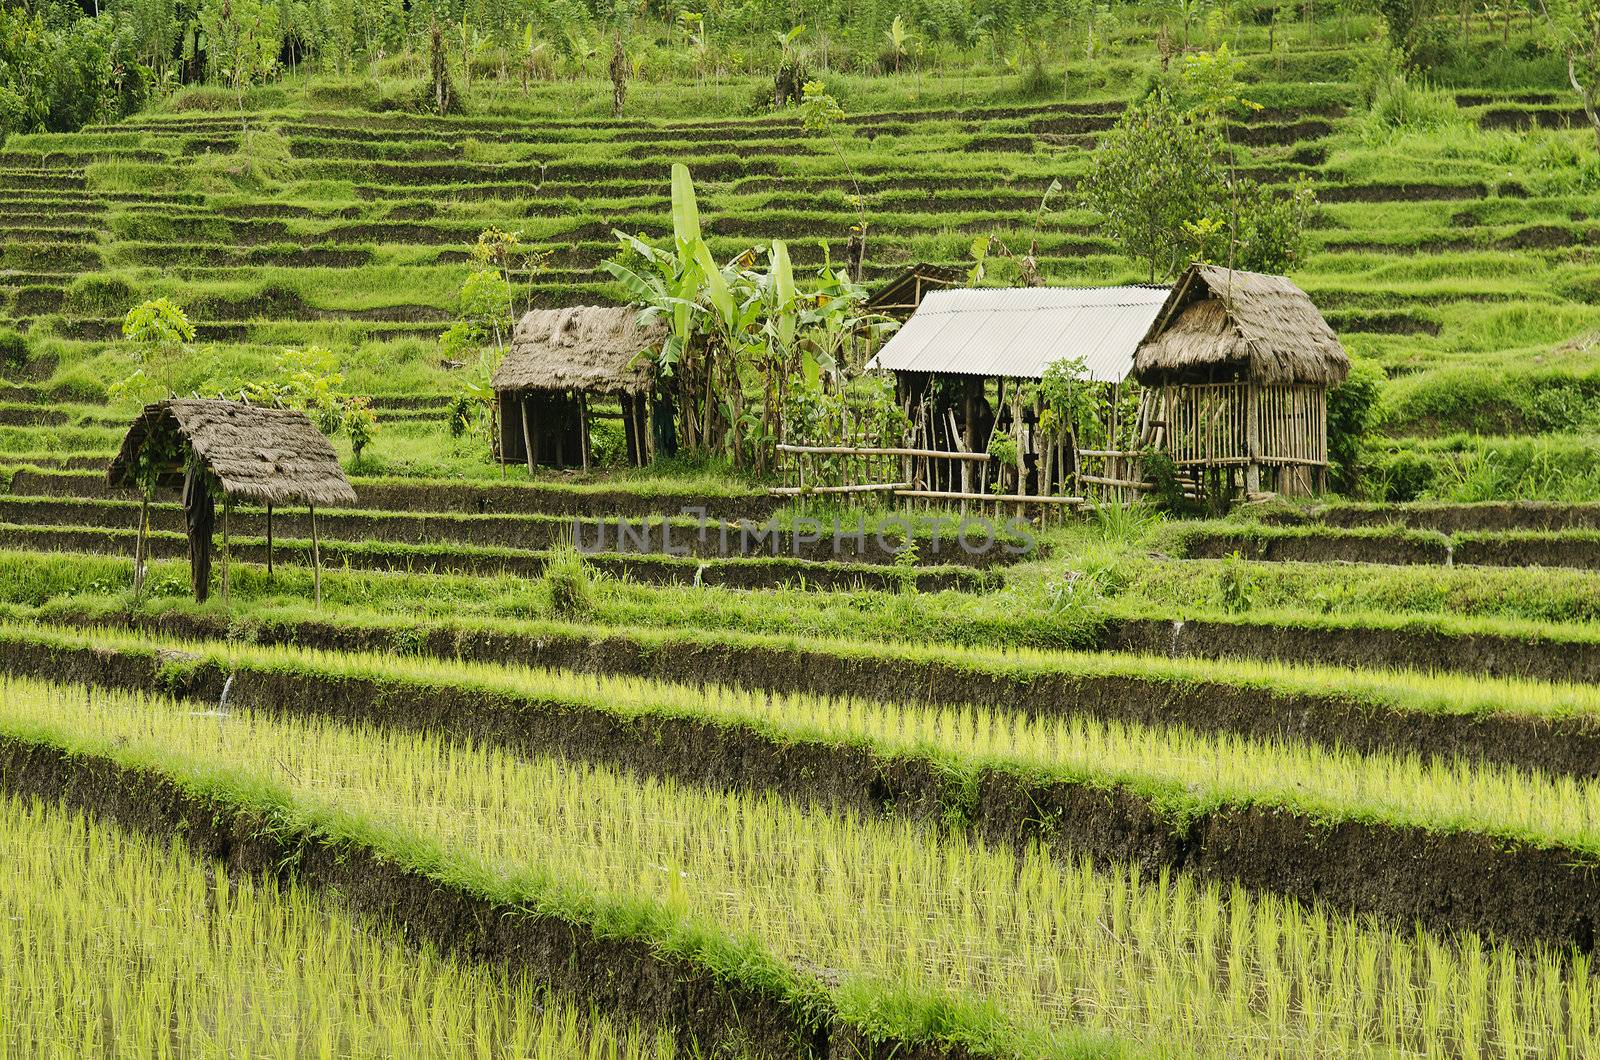 rice field landcape in bali indonesia by jackmalipan